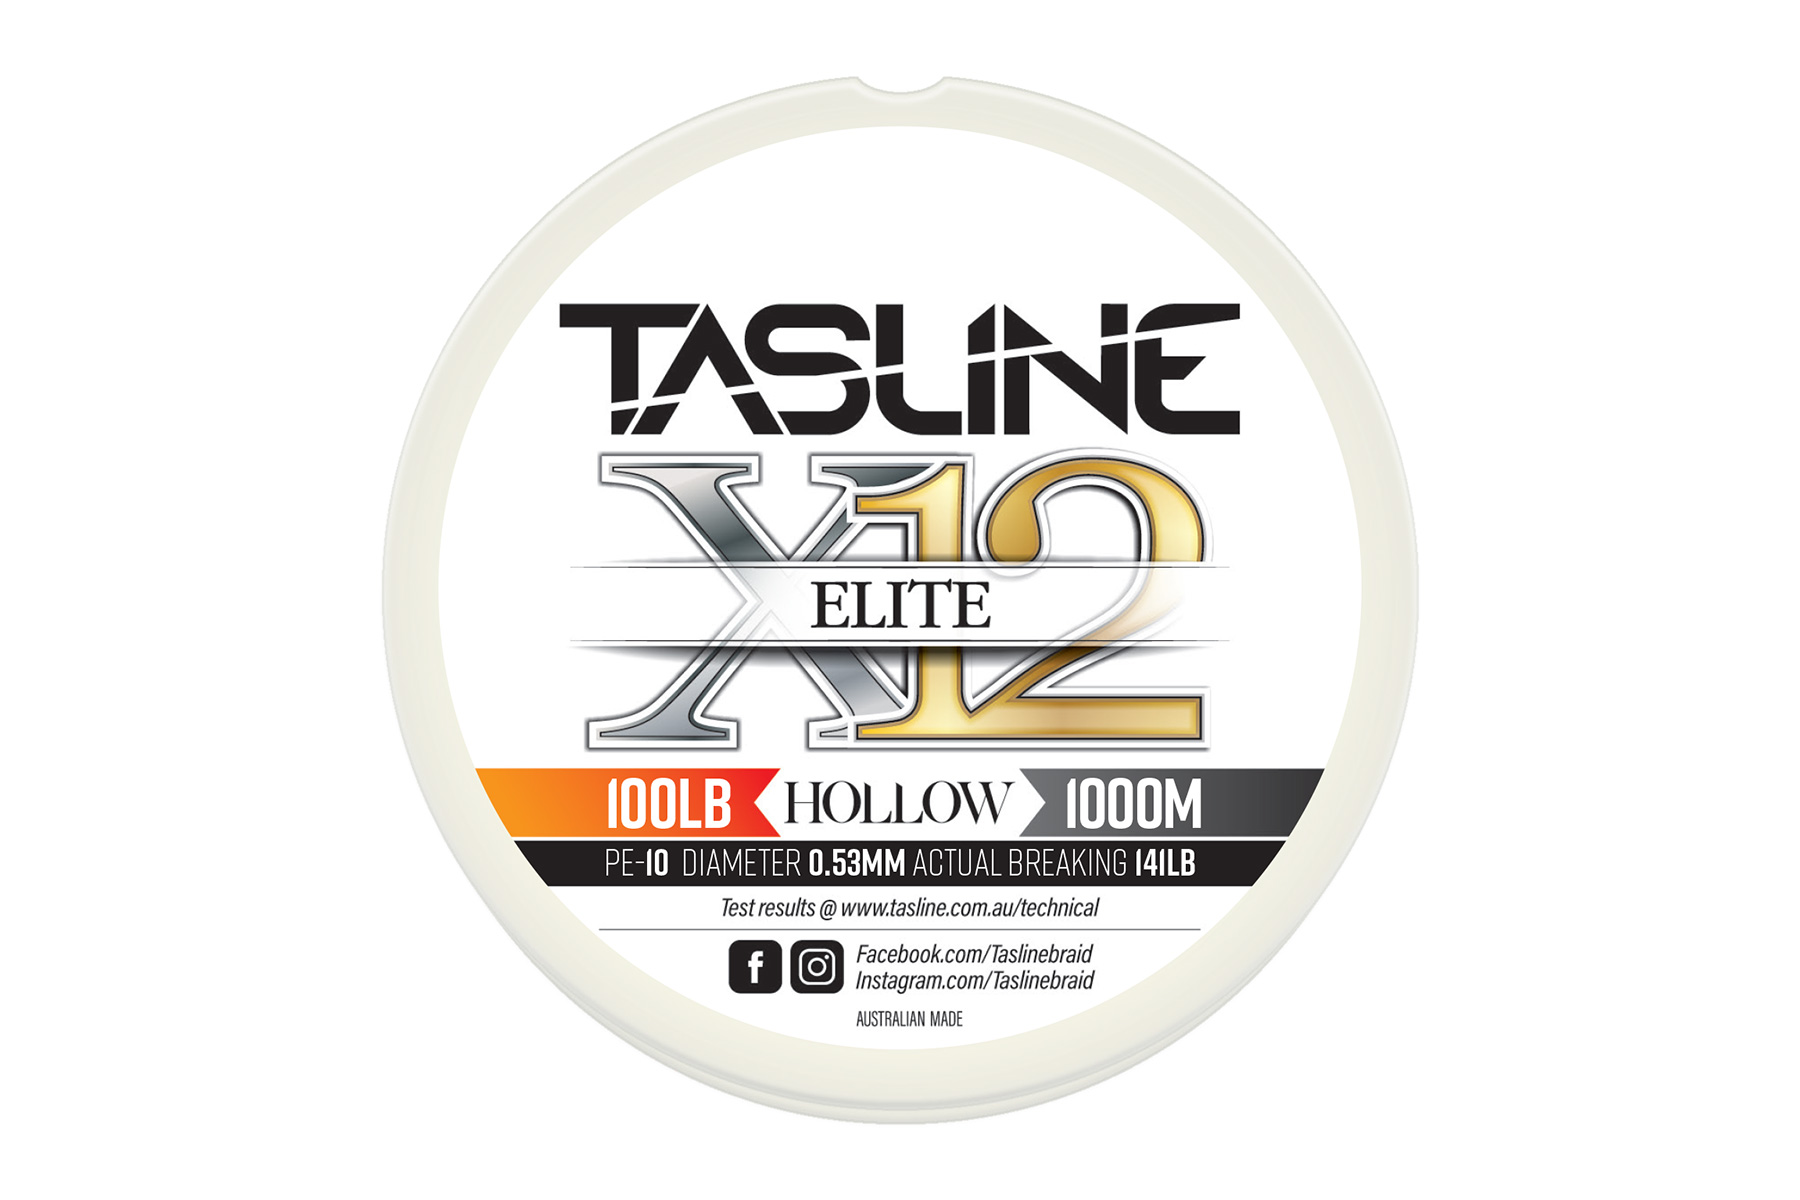 Tasline Elite Hollow 100lb - Tasline